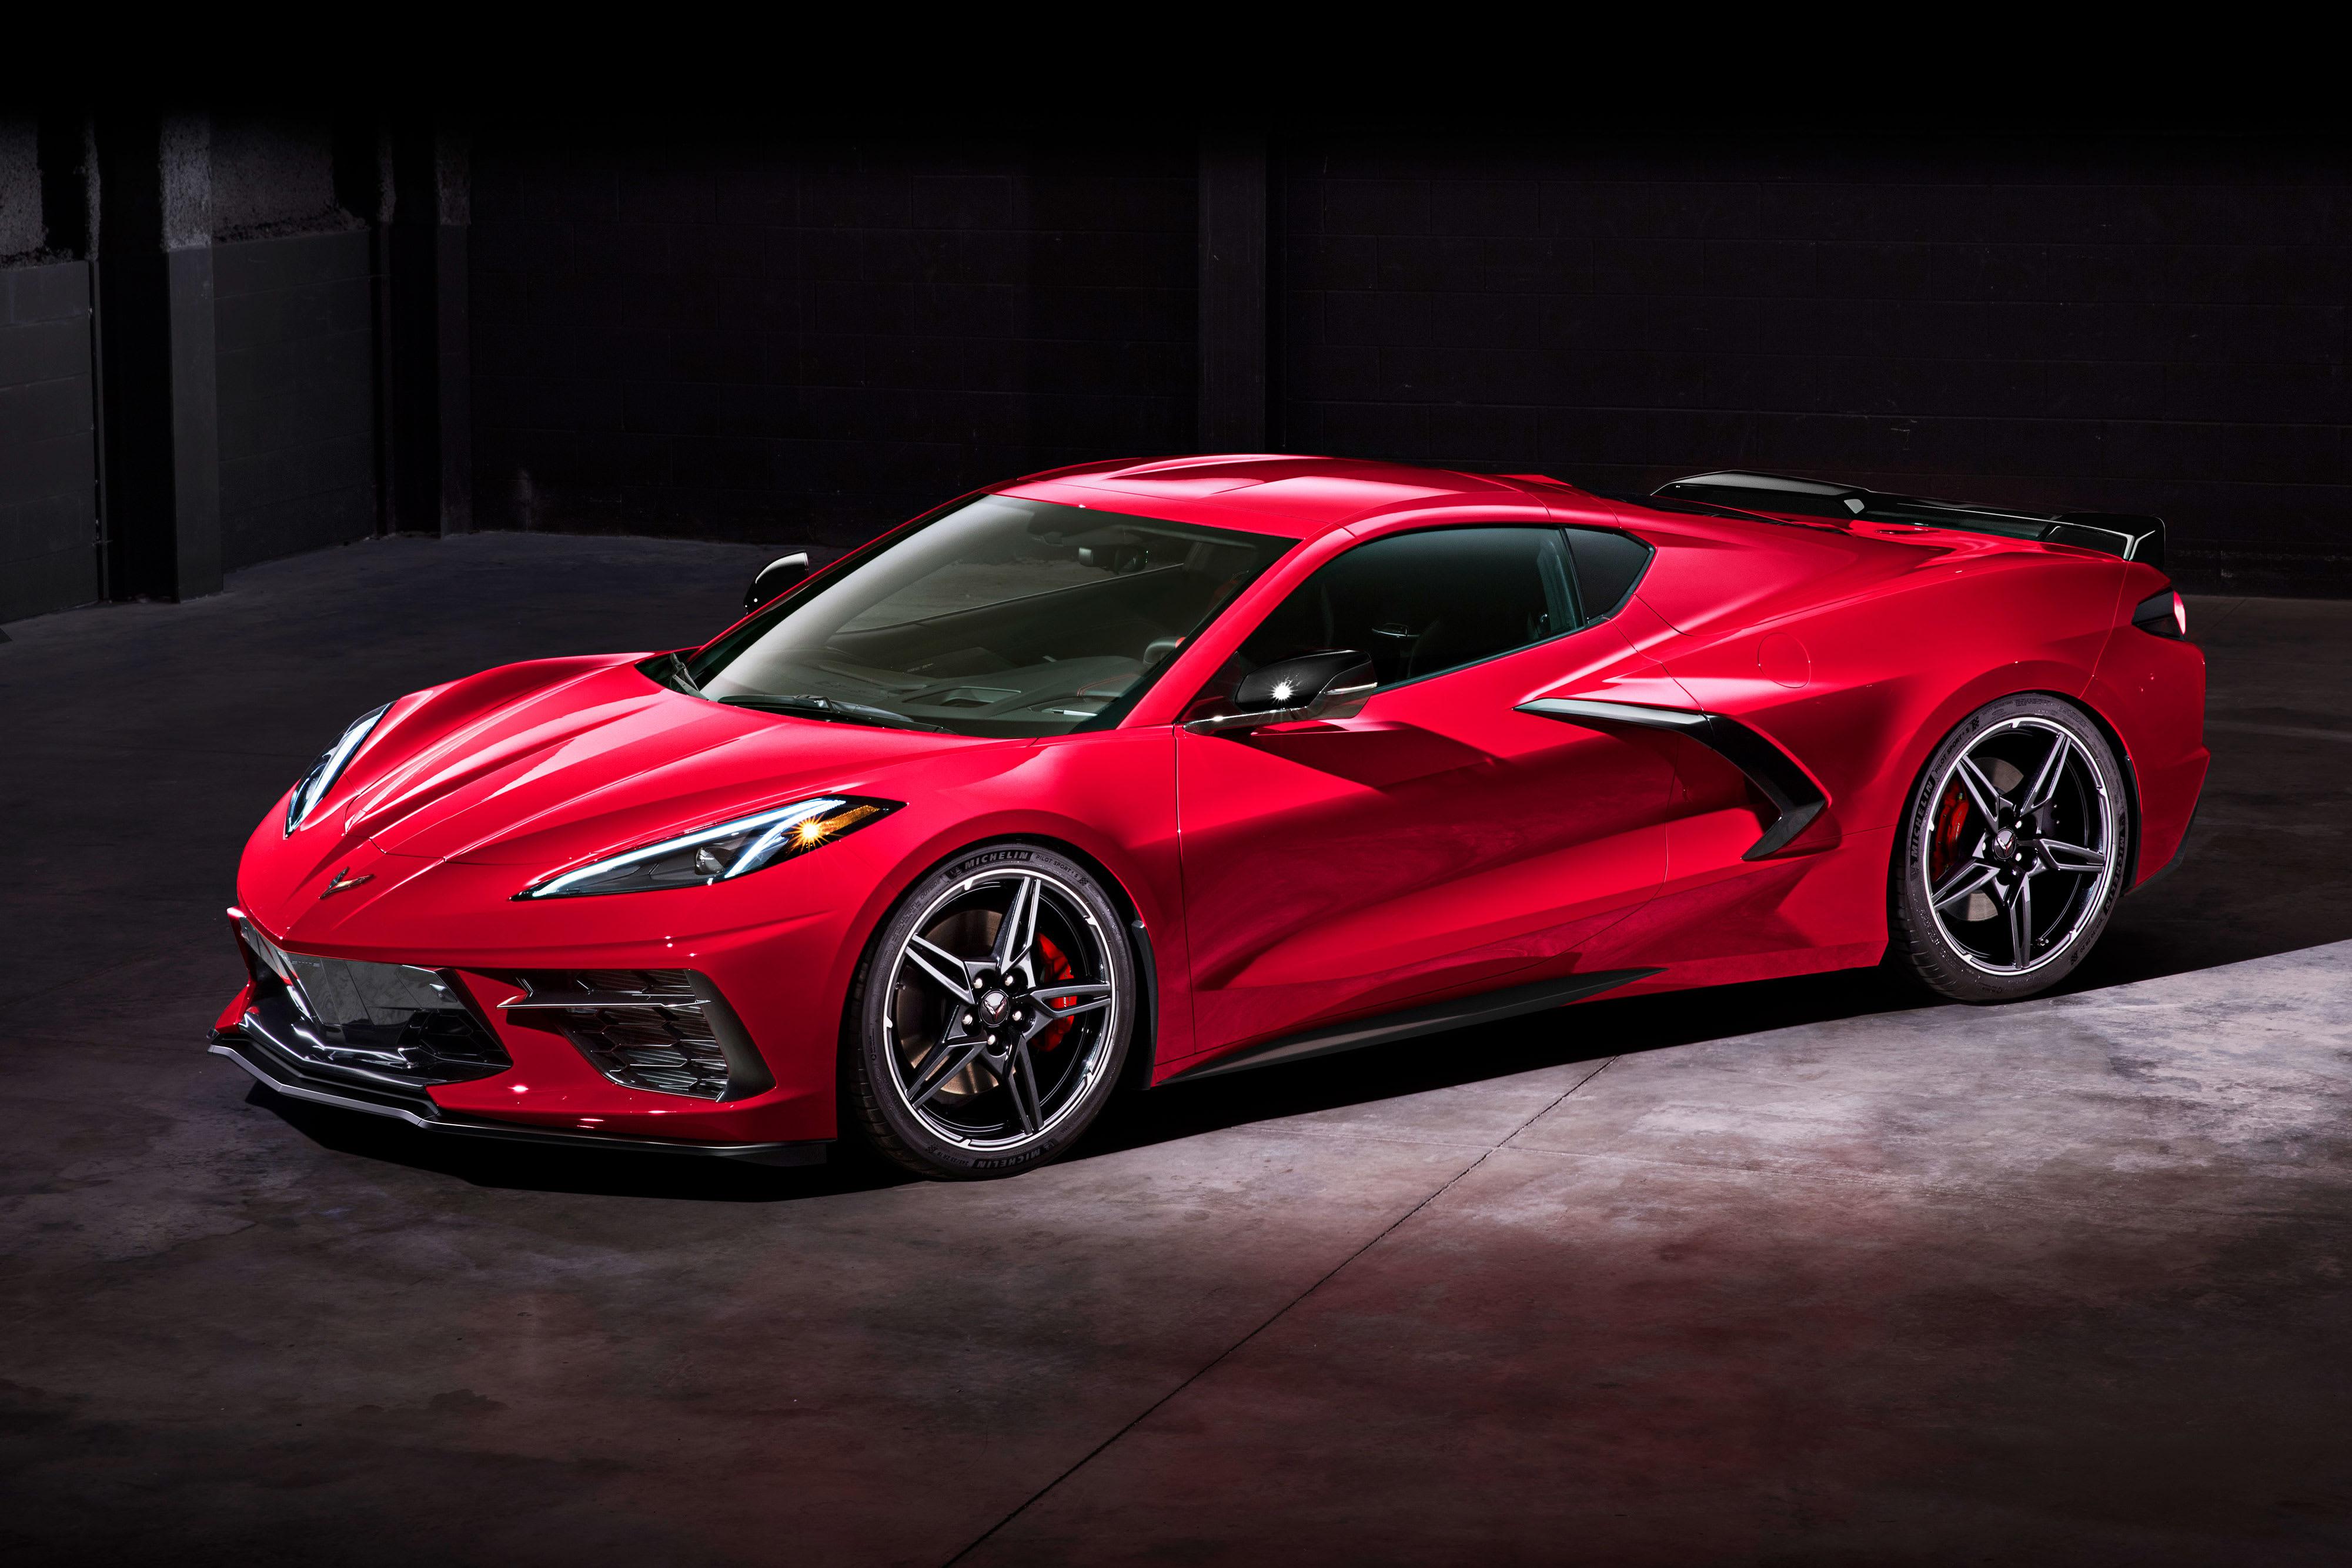 General Motors just unveiled its latest Corvette—the 2020 Stingray